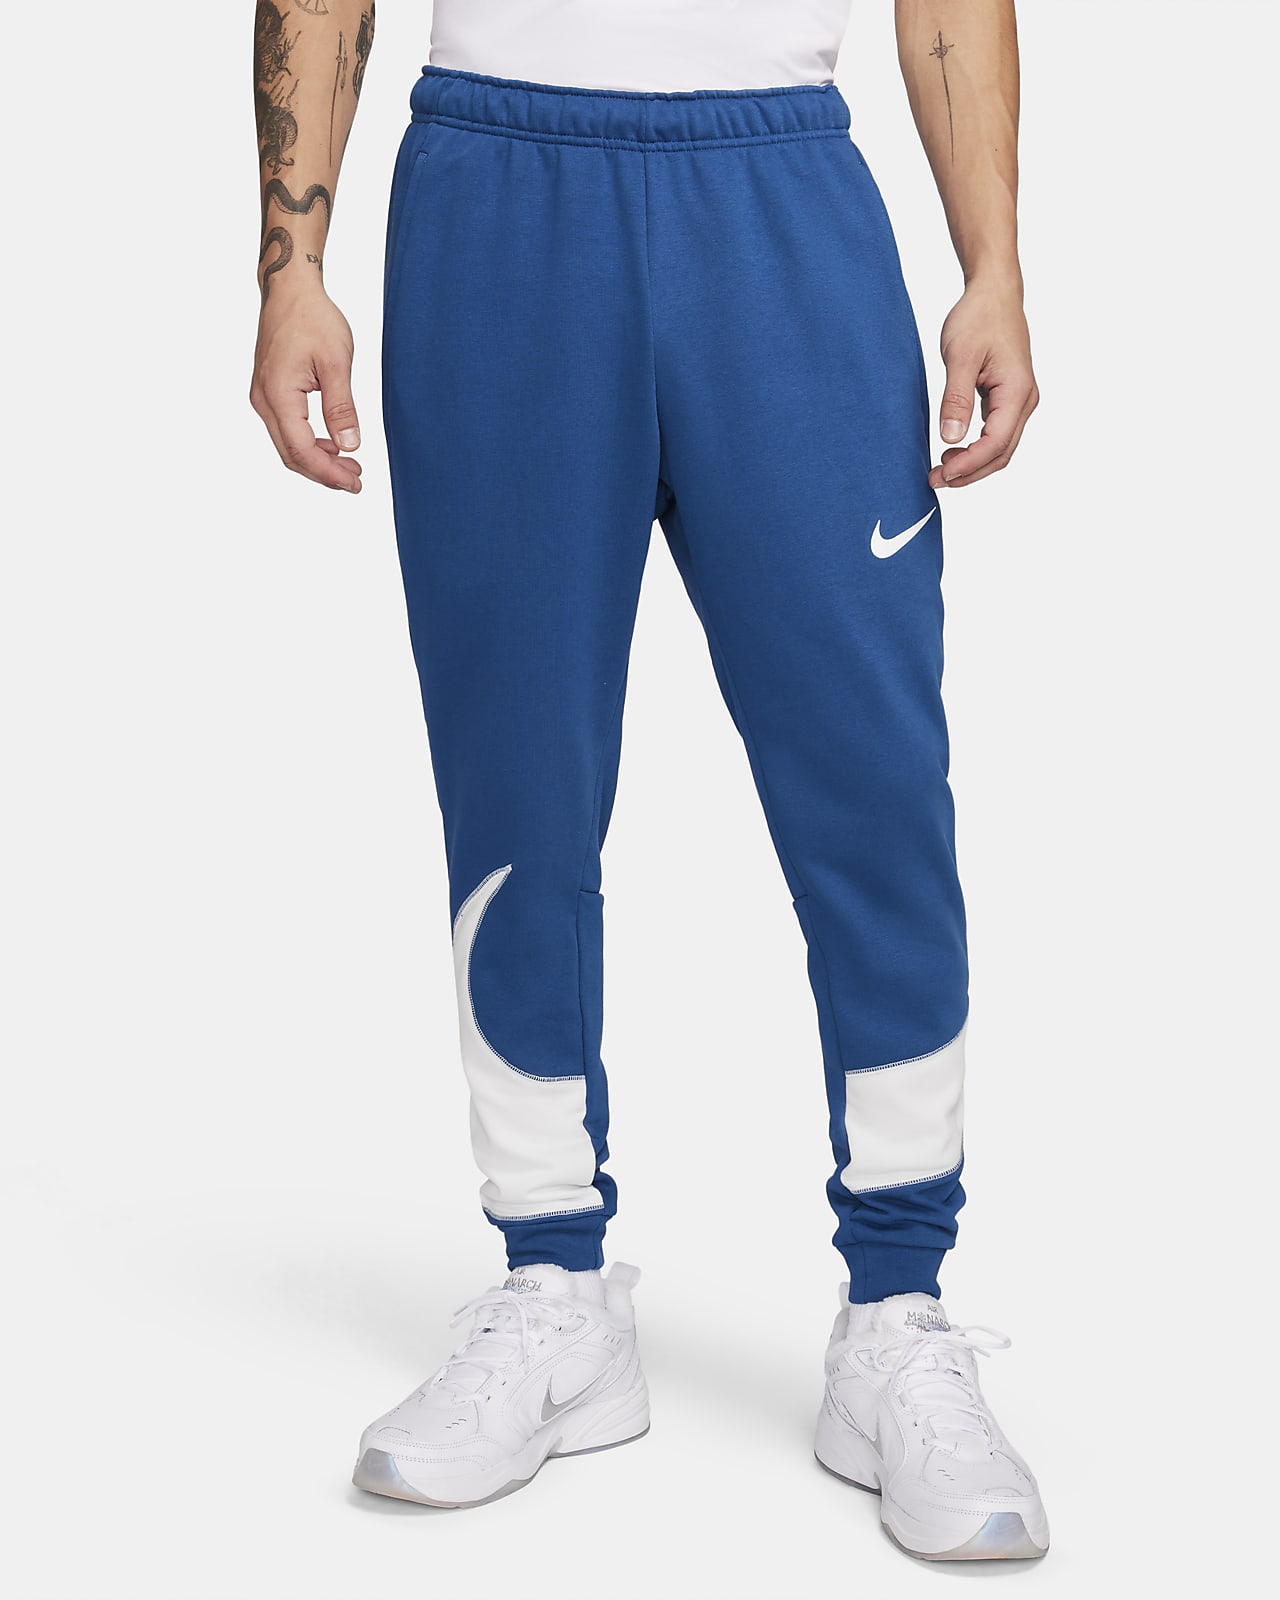 Nike Dri-FIT Men's Tapered Fitness Trousers